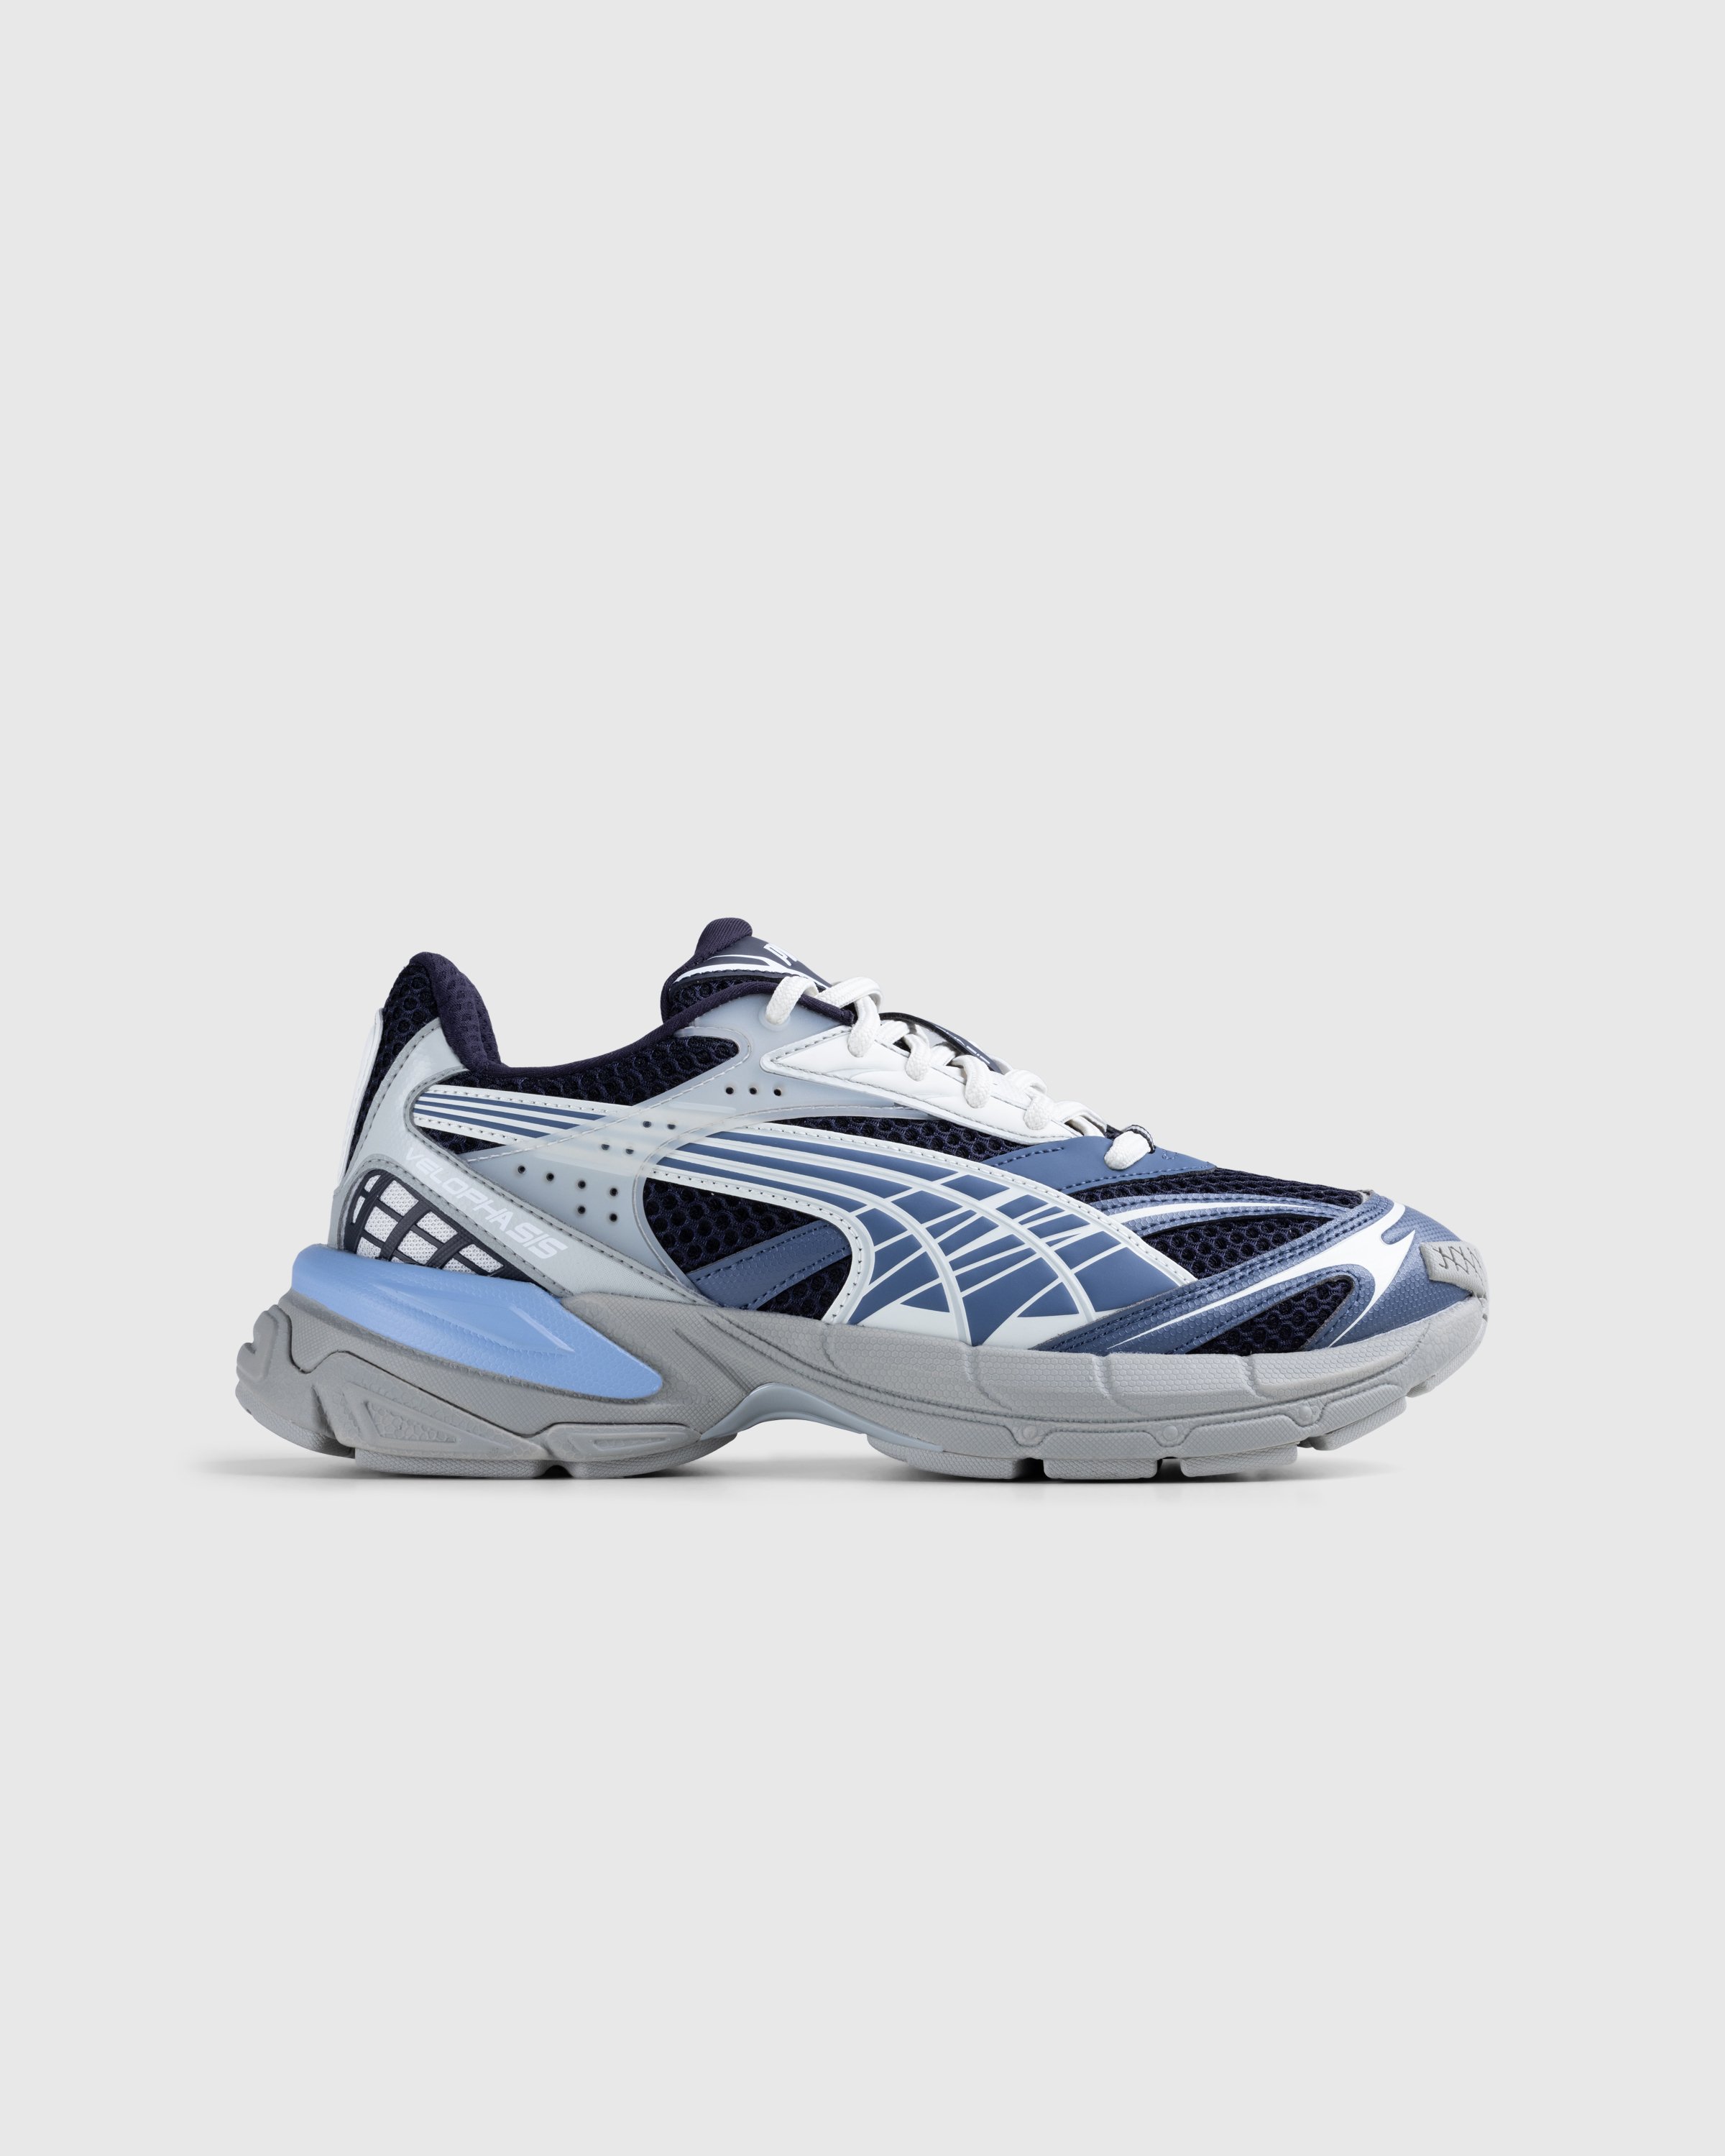 Puma - Velophasis Phased White/Blue - Footwear - Multi - Image 1